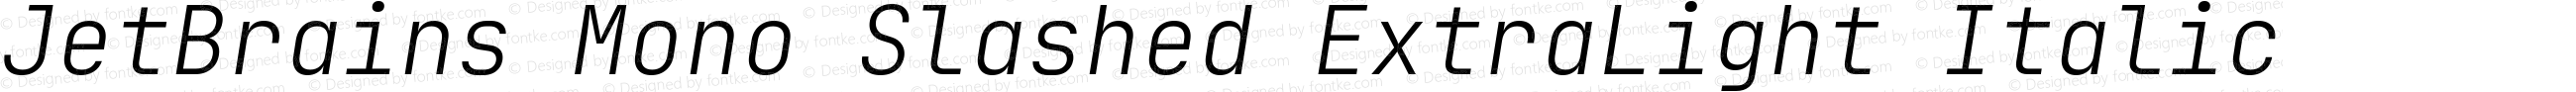 JetBrains Mono Slashed ExtraLight Italic